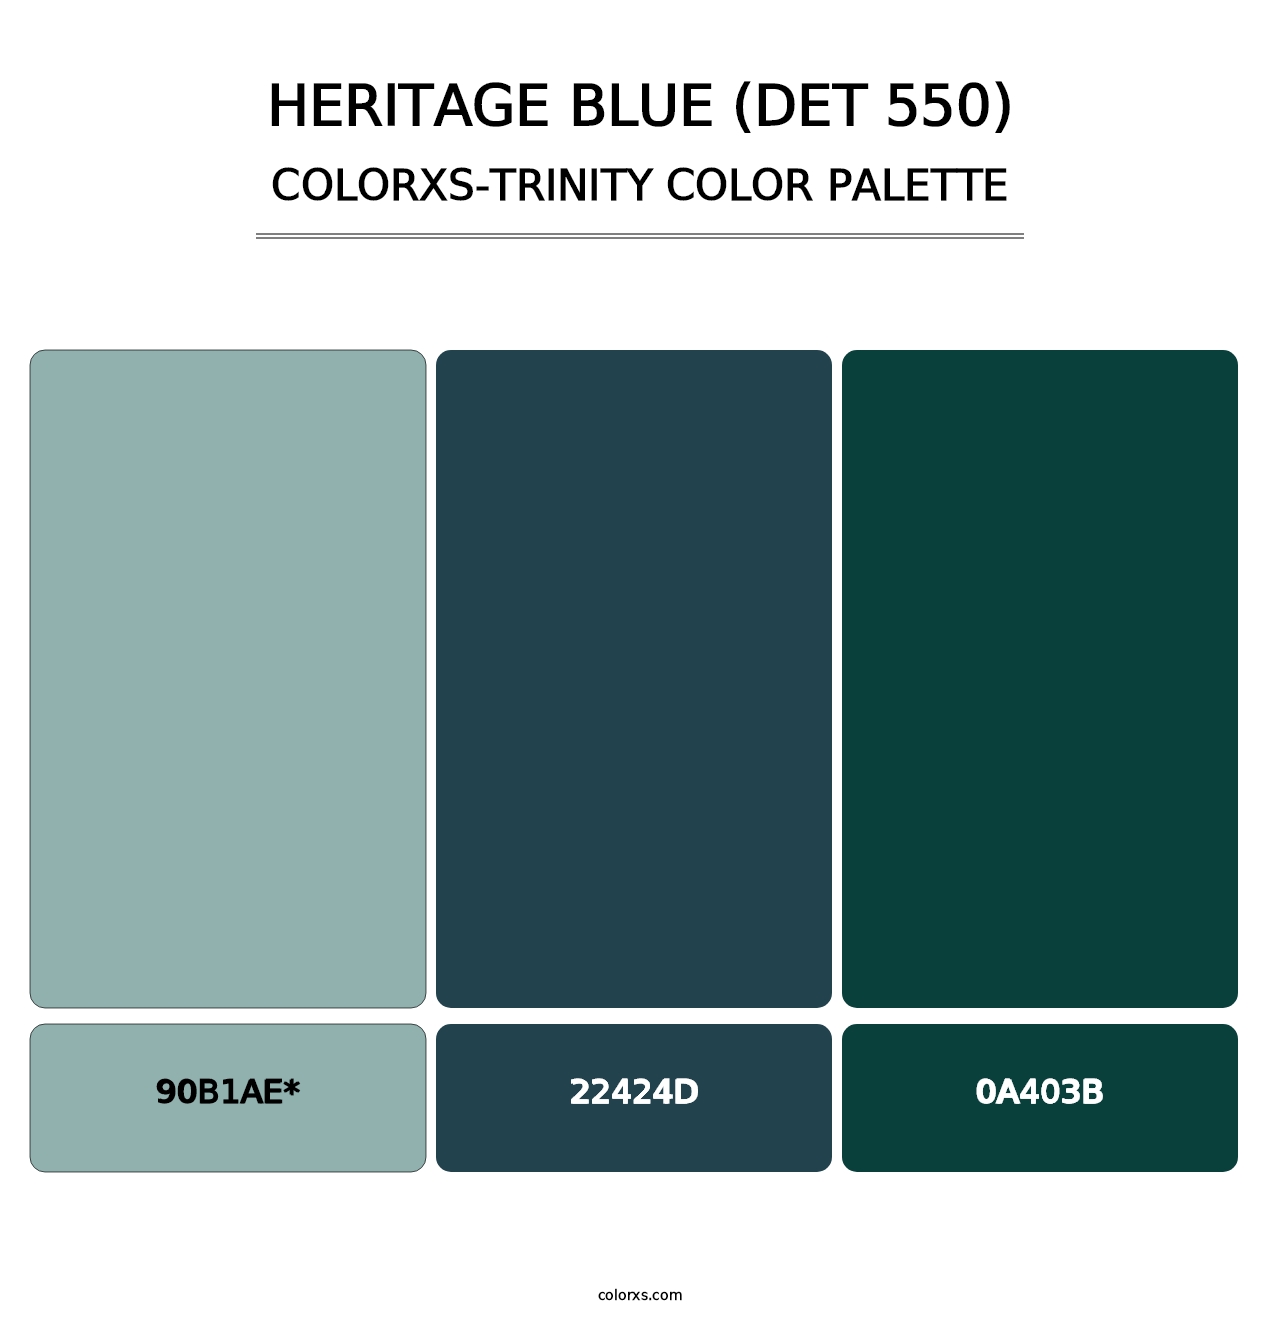 Heritage Blue (DET 550) - Colorxs Trinity Palette